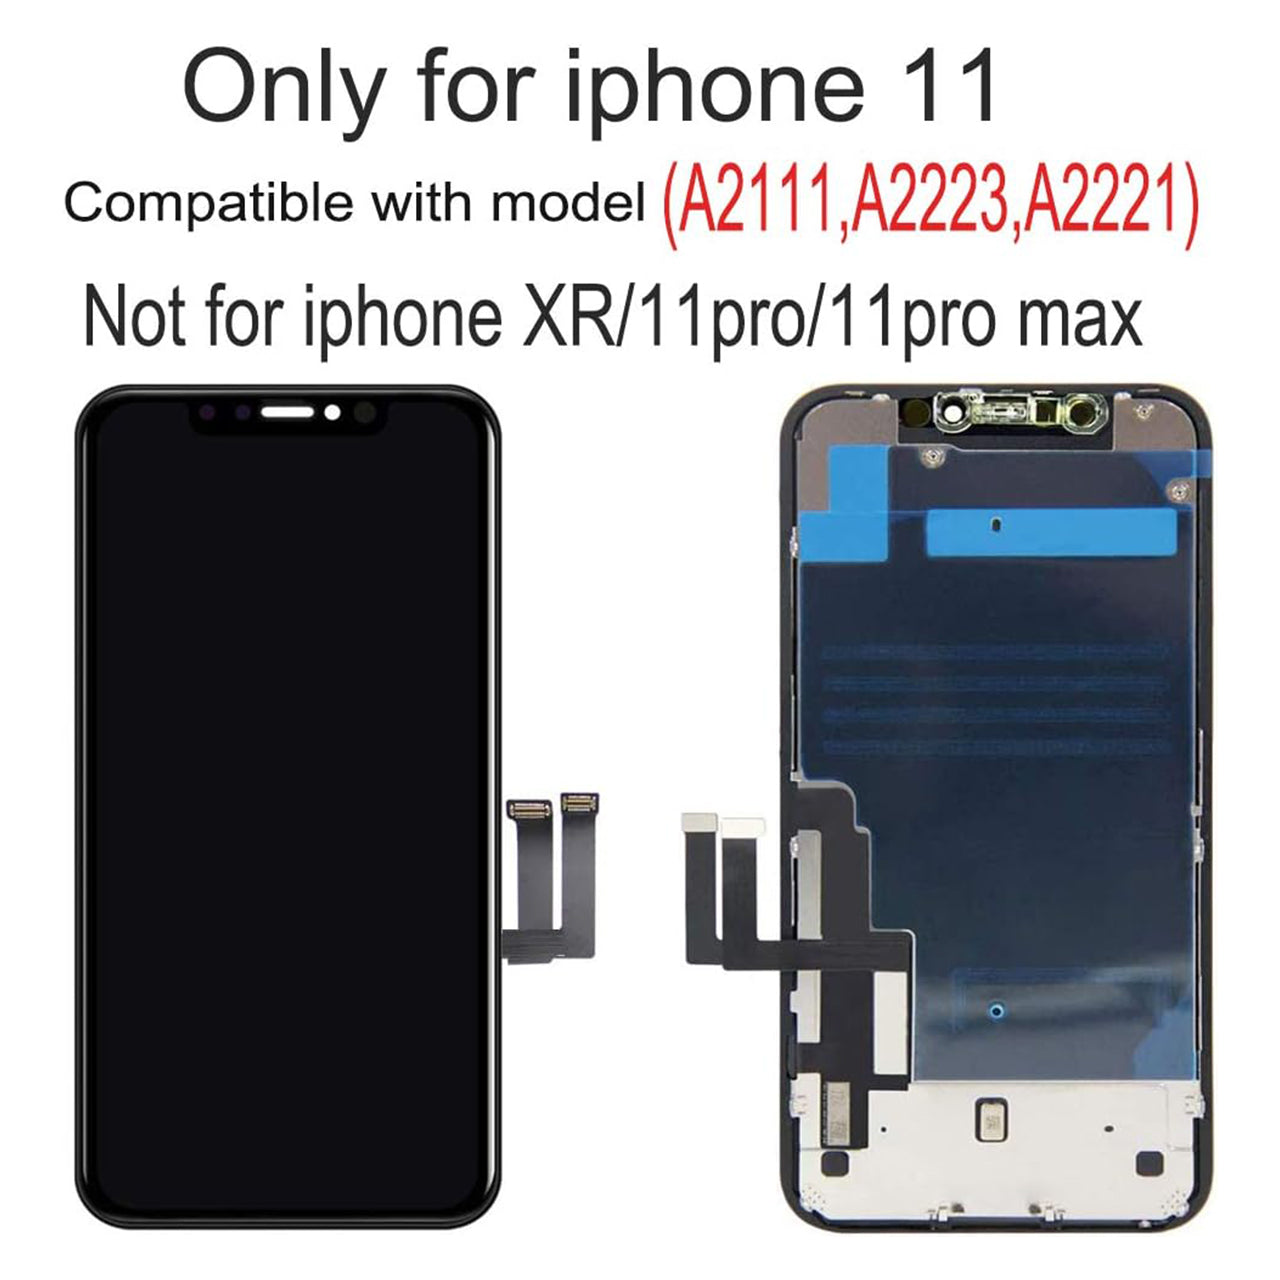 iPhone 11 reemplazo de pantalla LCD y digitalizador - iPhone 11 LCD Screen Replacement and Digitizer